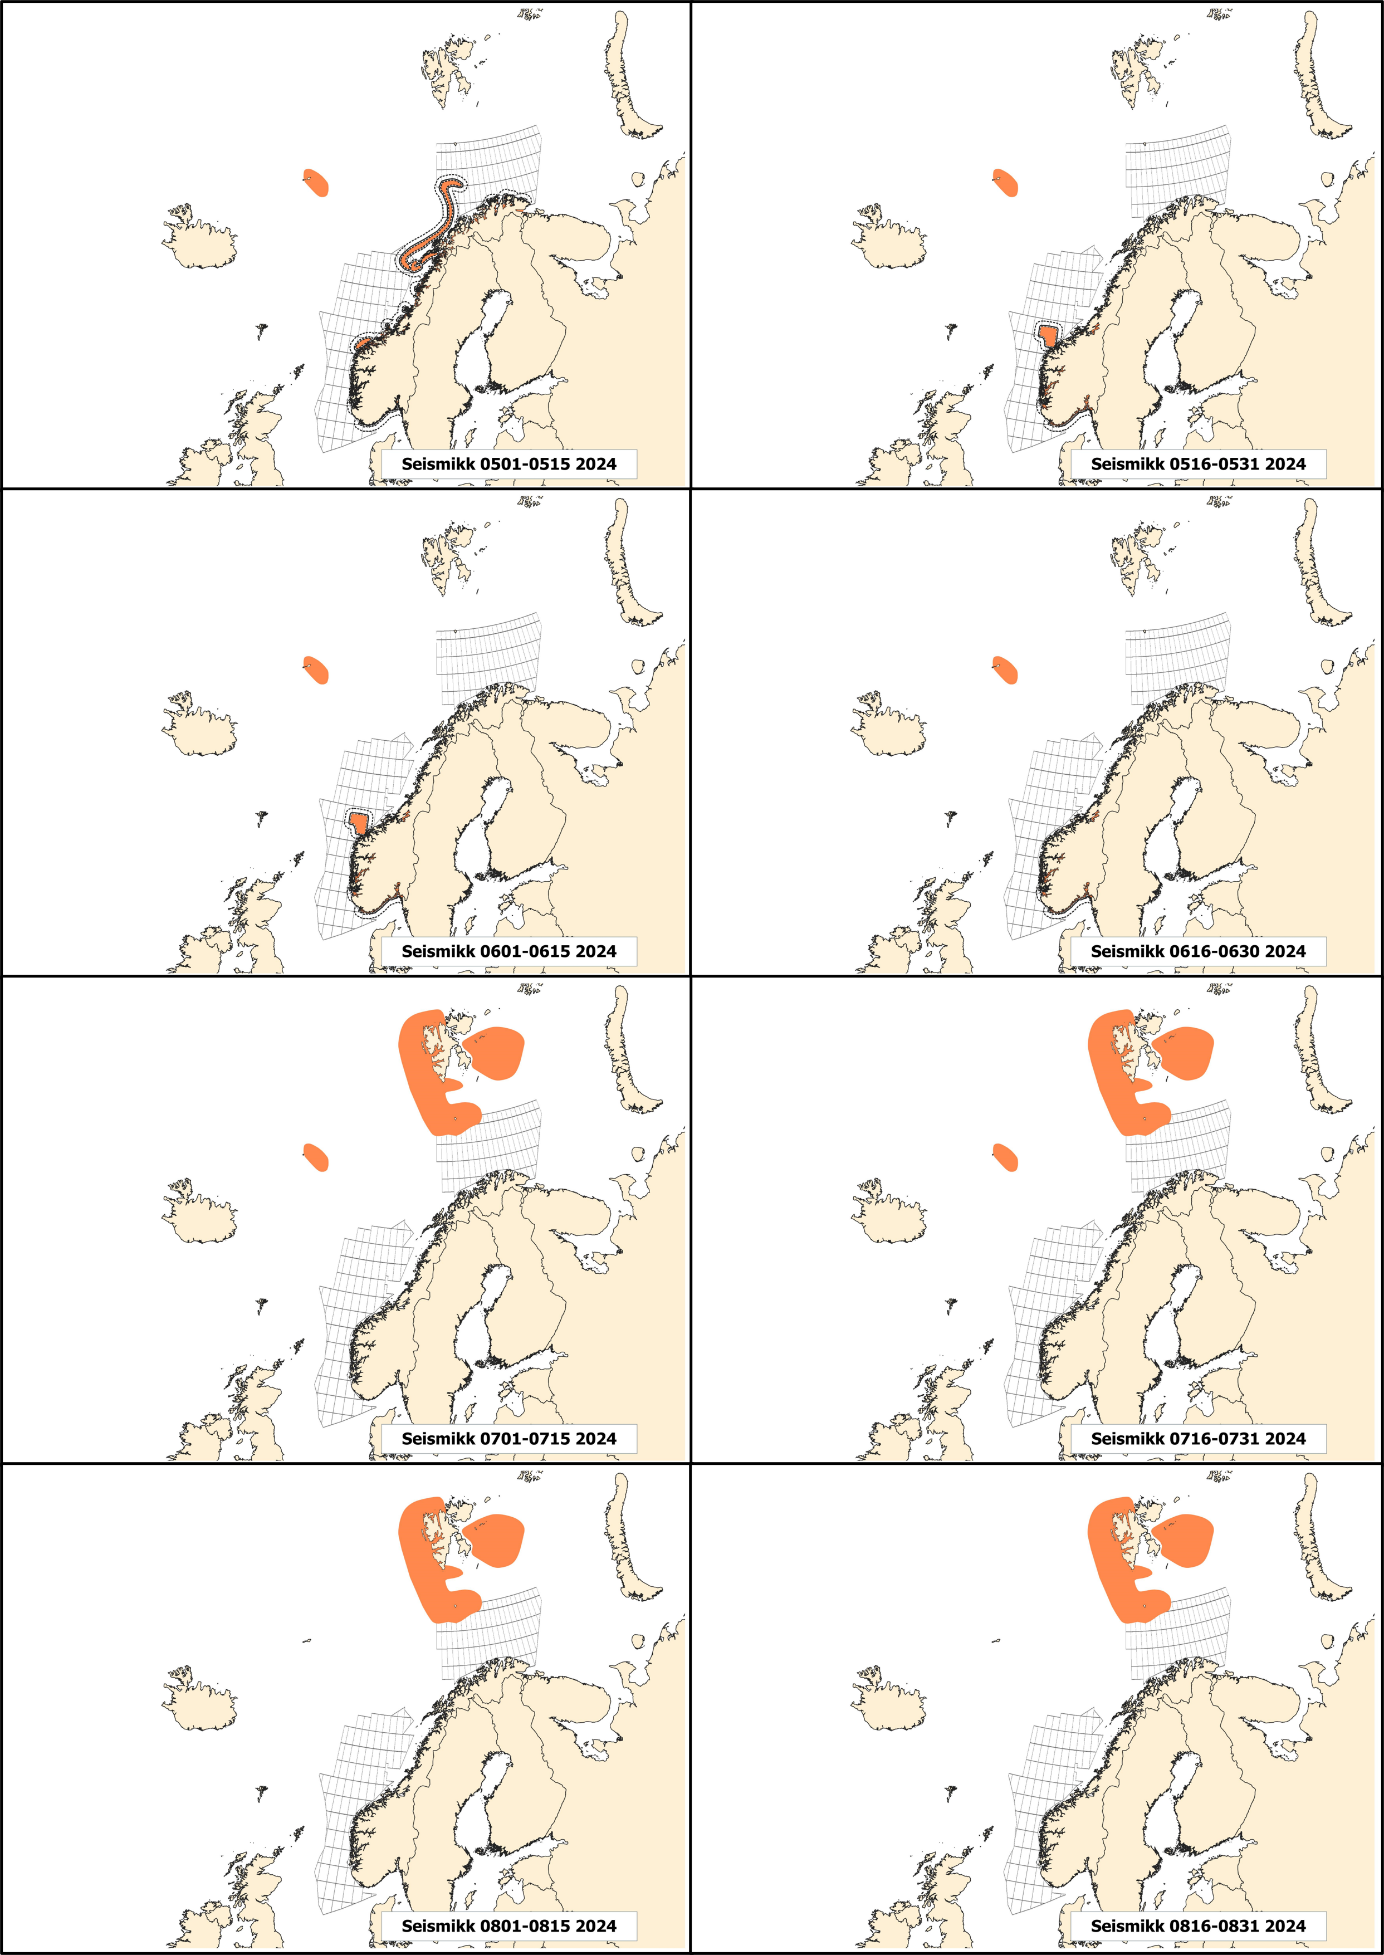 Figur A1.4 Oversikt over rådgivningskart for seismikk